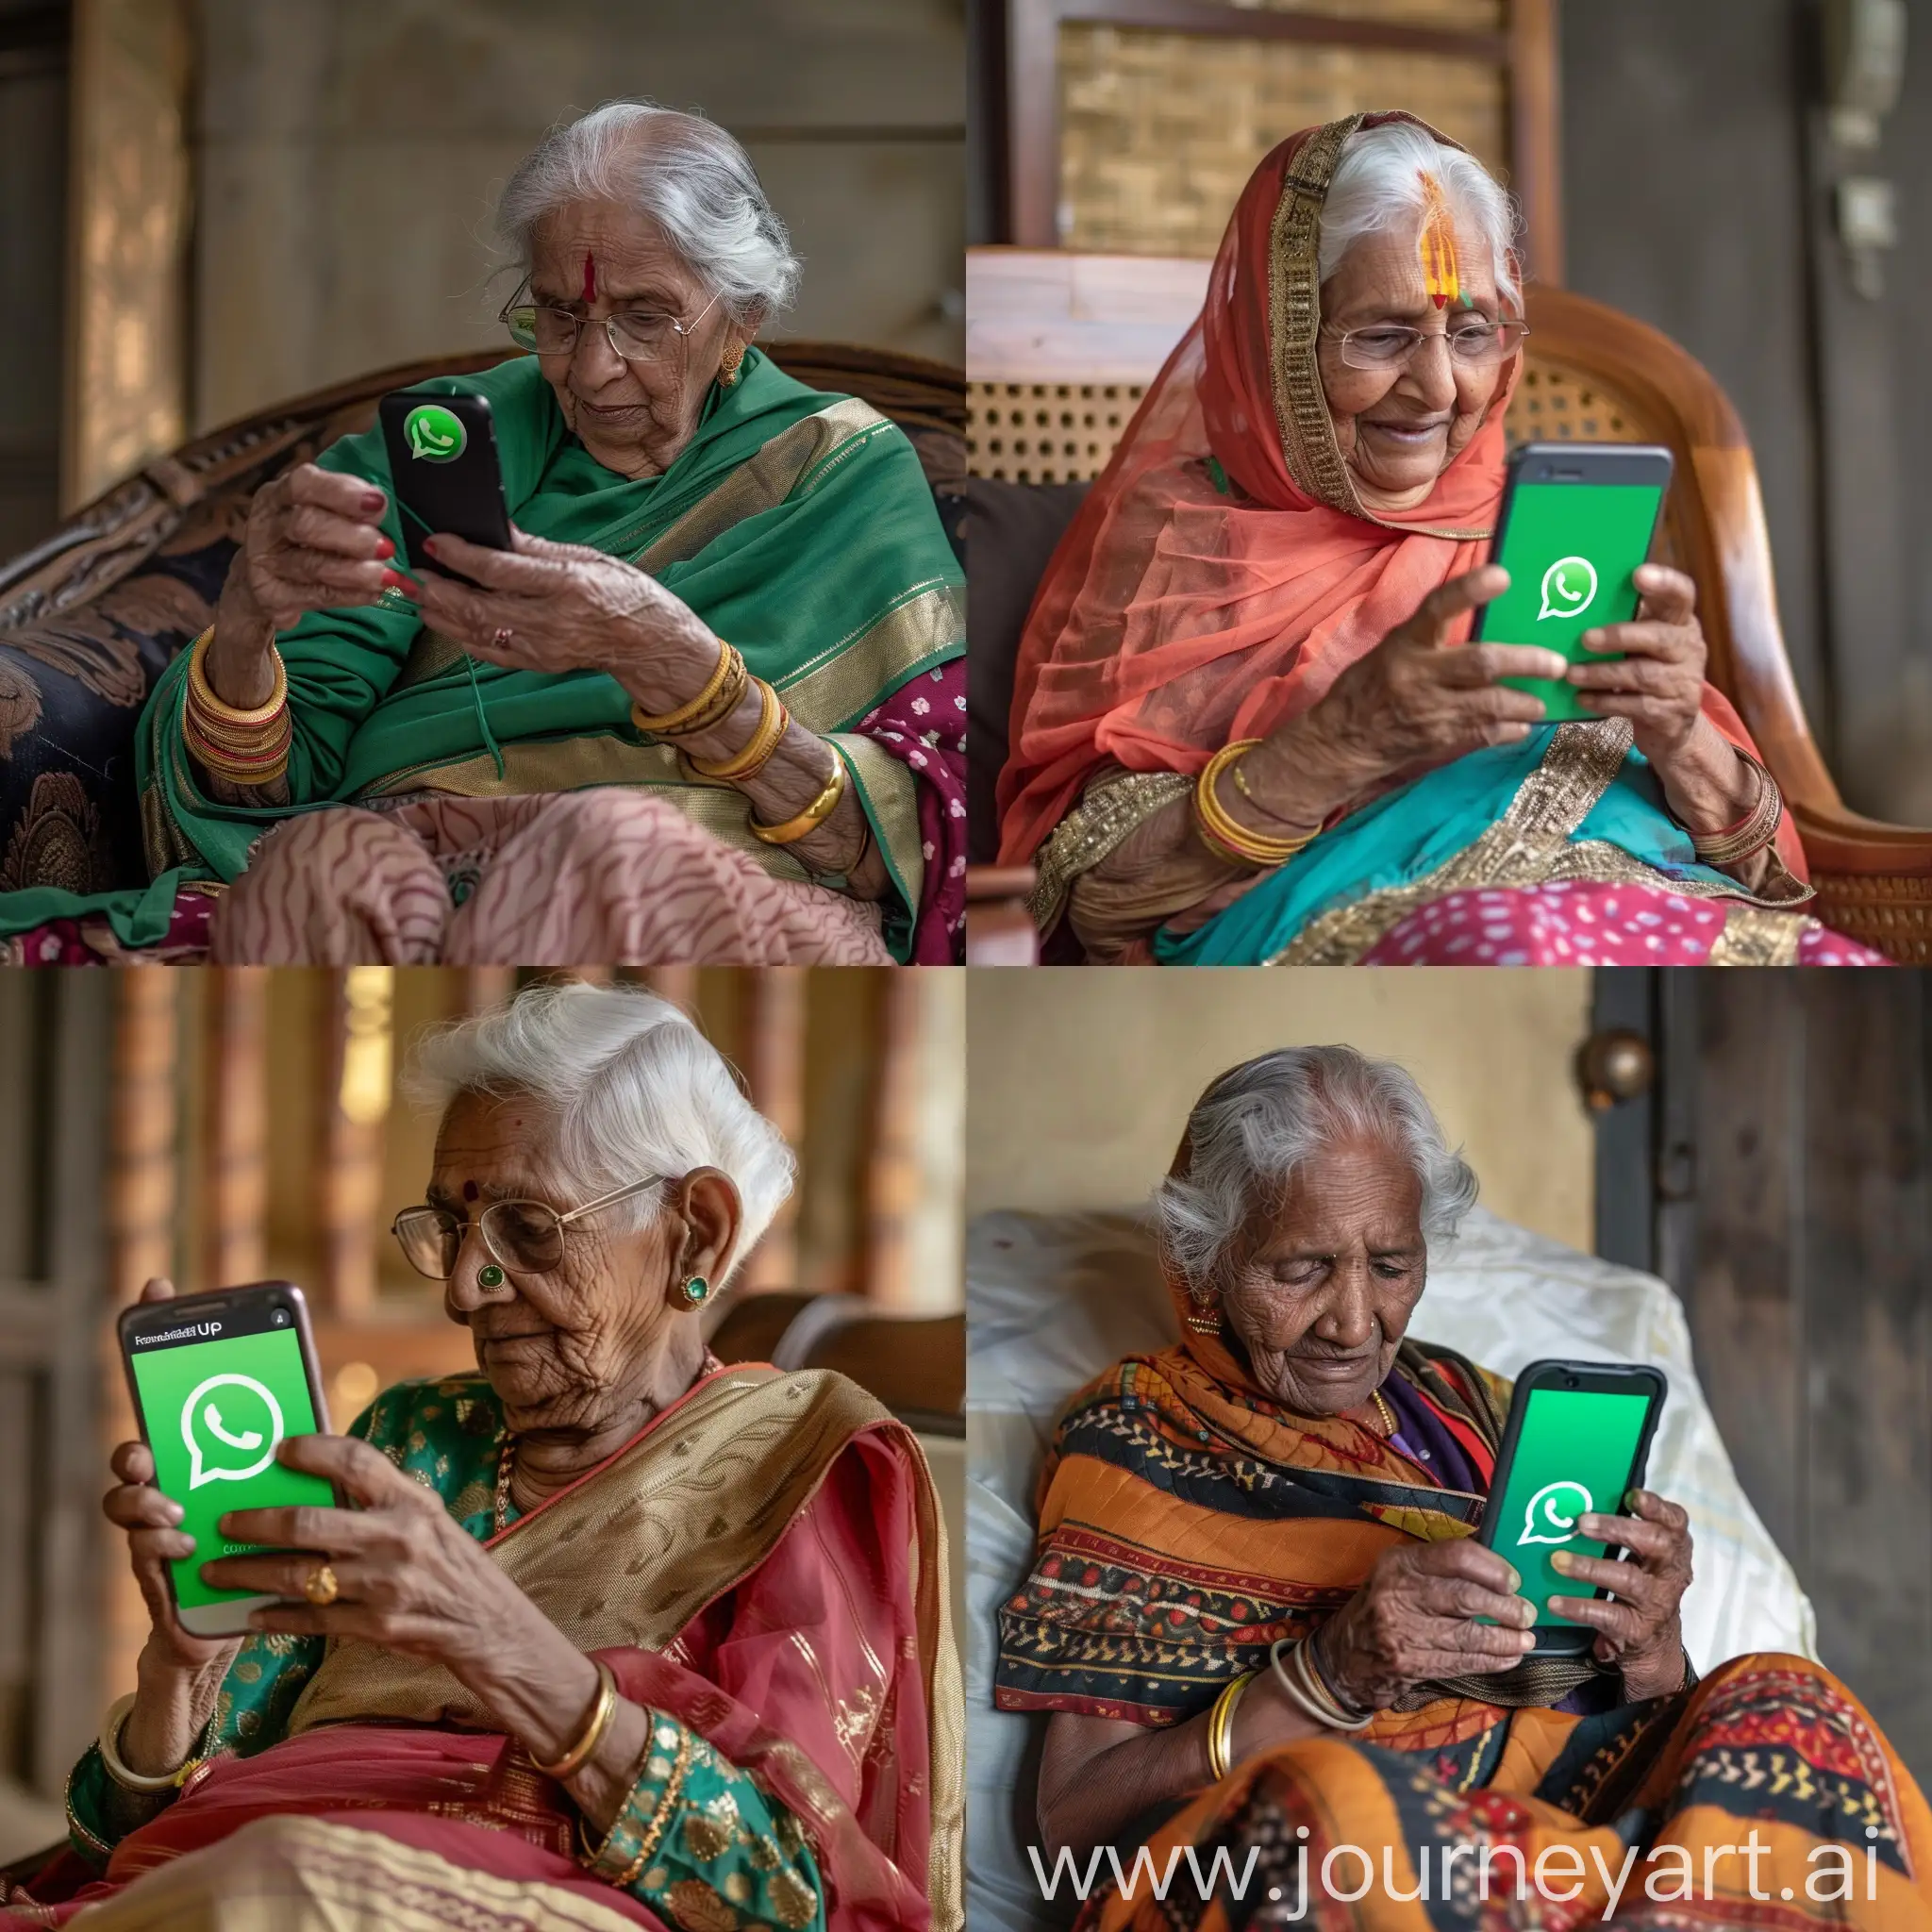 Elderly-Indian-Woman-Embracing-Modern-Technology-with-WhatsApp-UPI